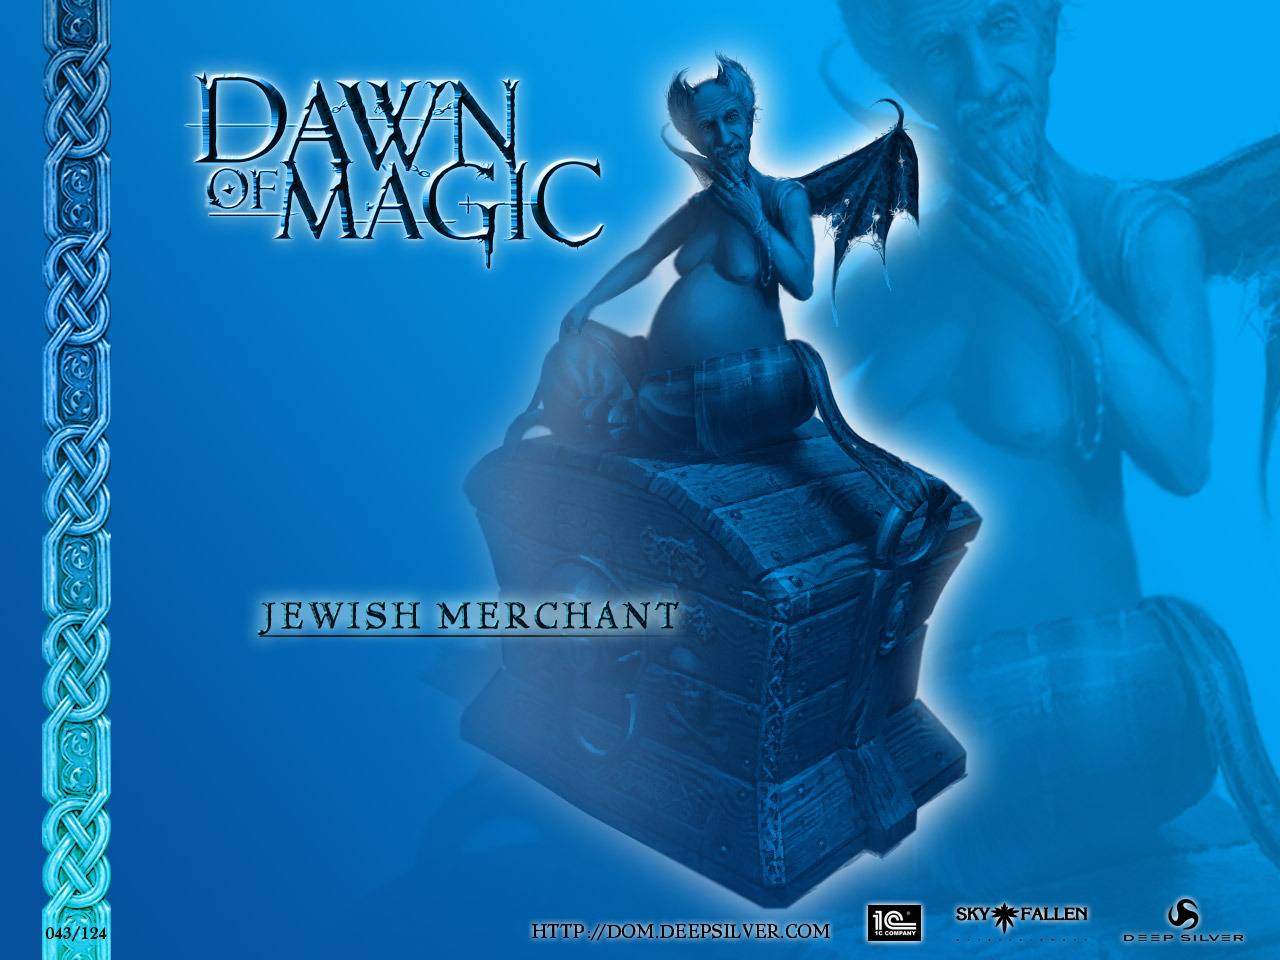 Jewish Merchant Dawn Of Magic Wallpaper Gallery Best Game